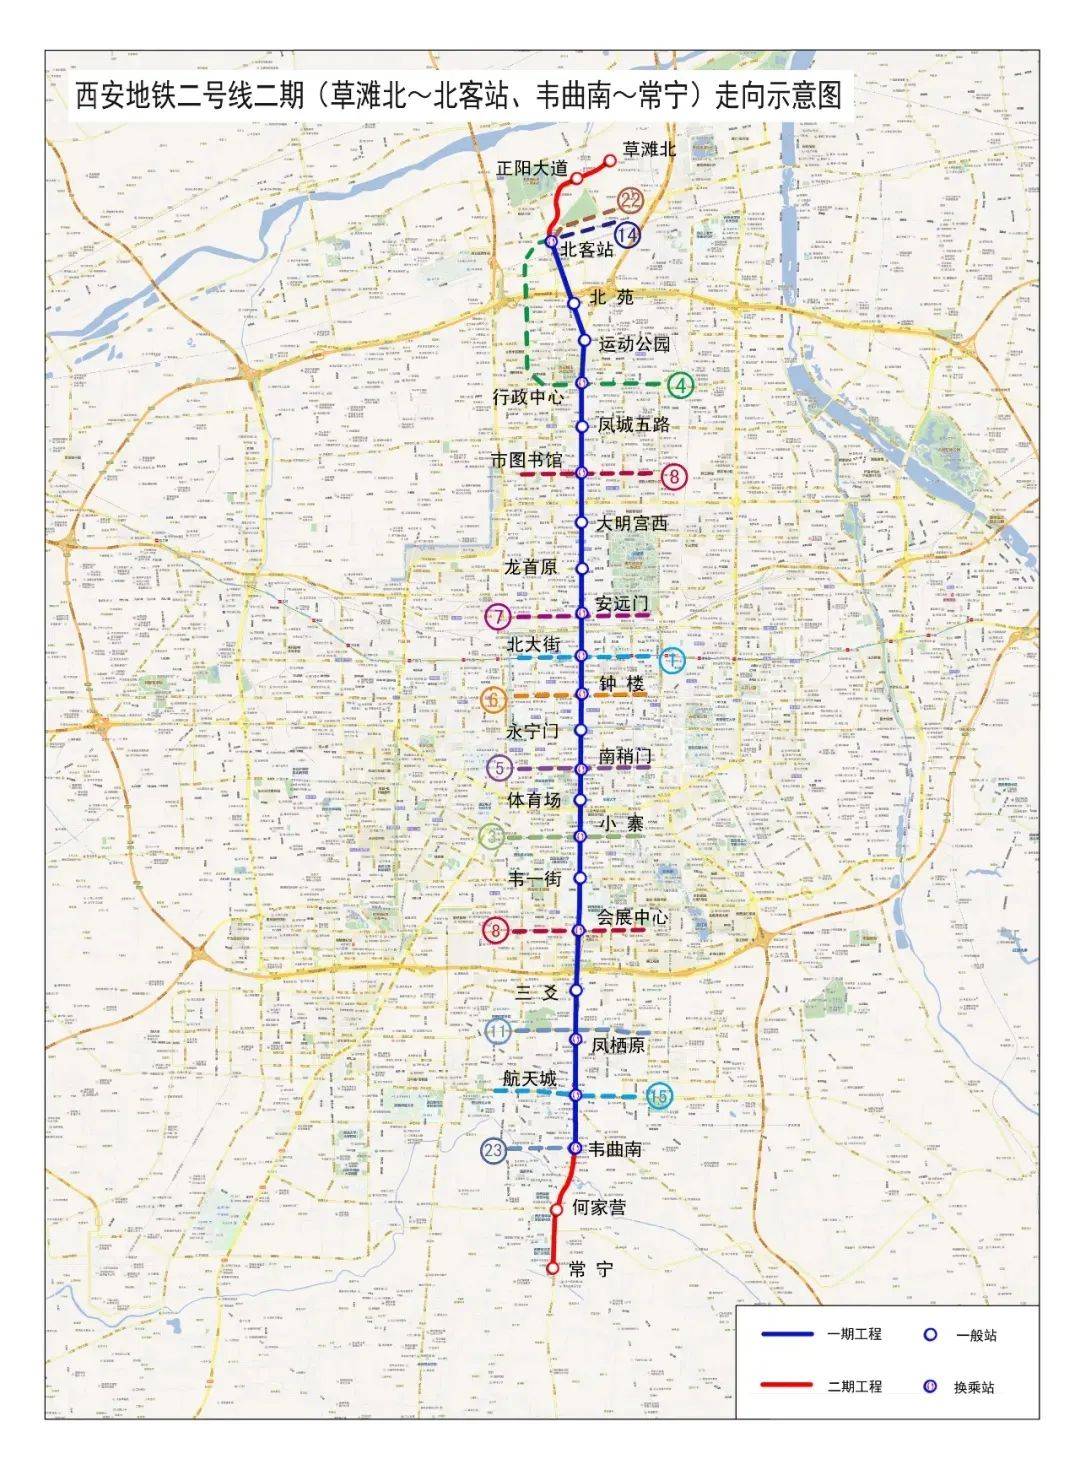 西安地铁最新进展!1号线,2号线,4号线,8号线,14号线.